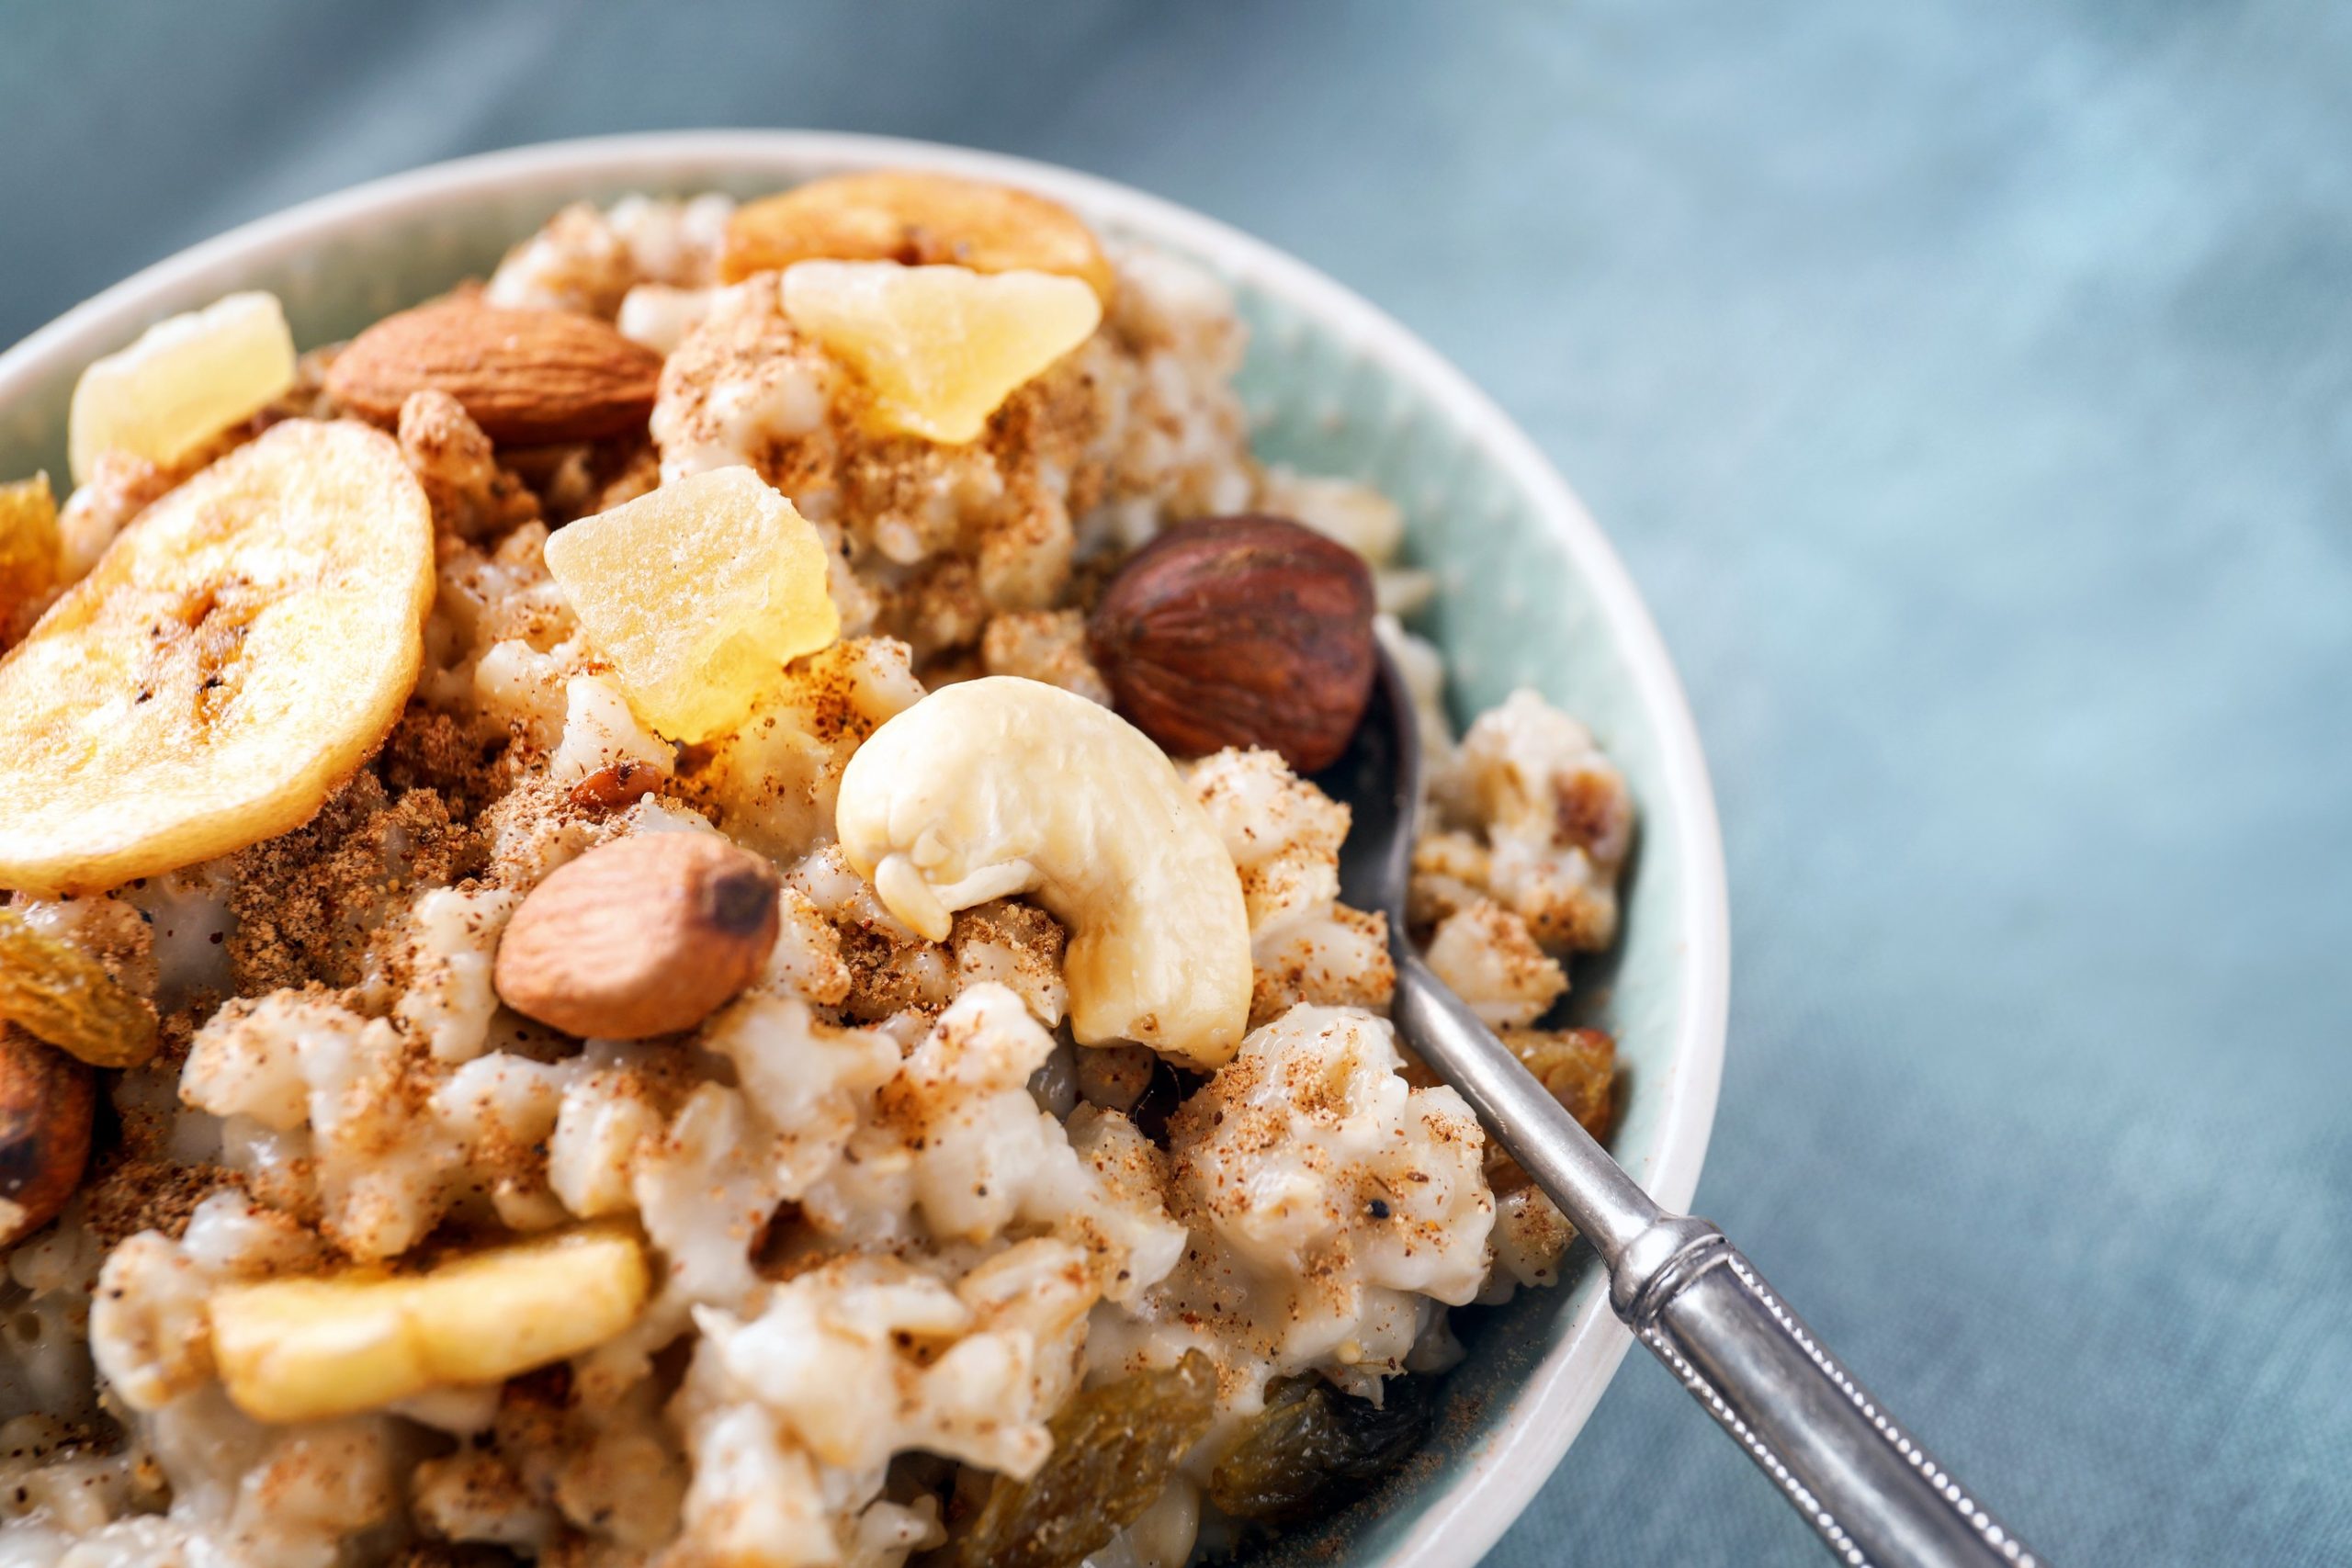 Philadelphia Breakfast Choices | Office Snacks | Healthy Oatmeal Options